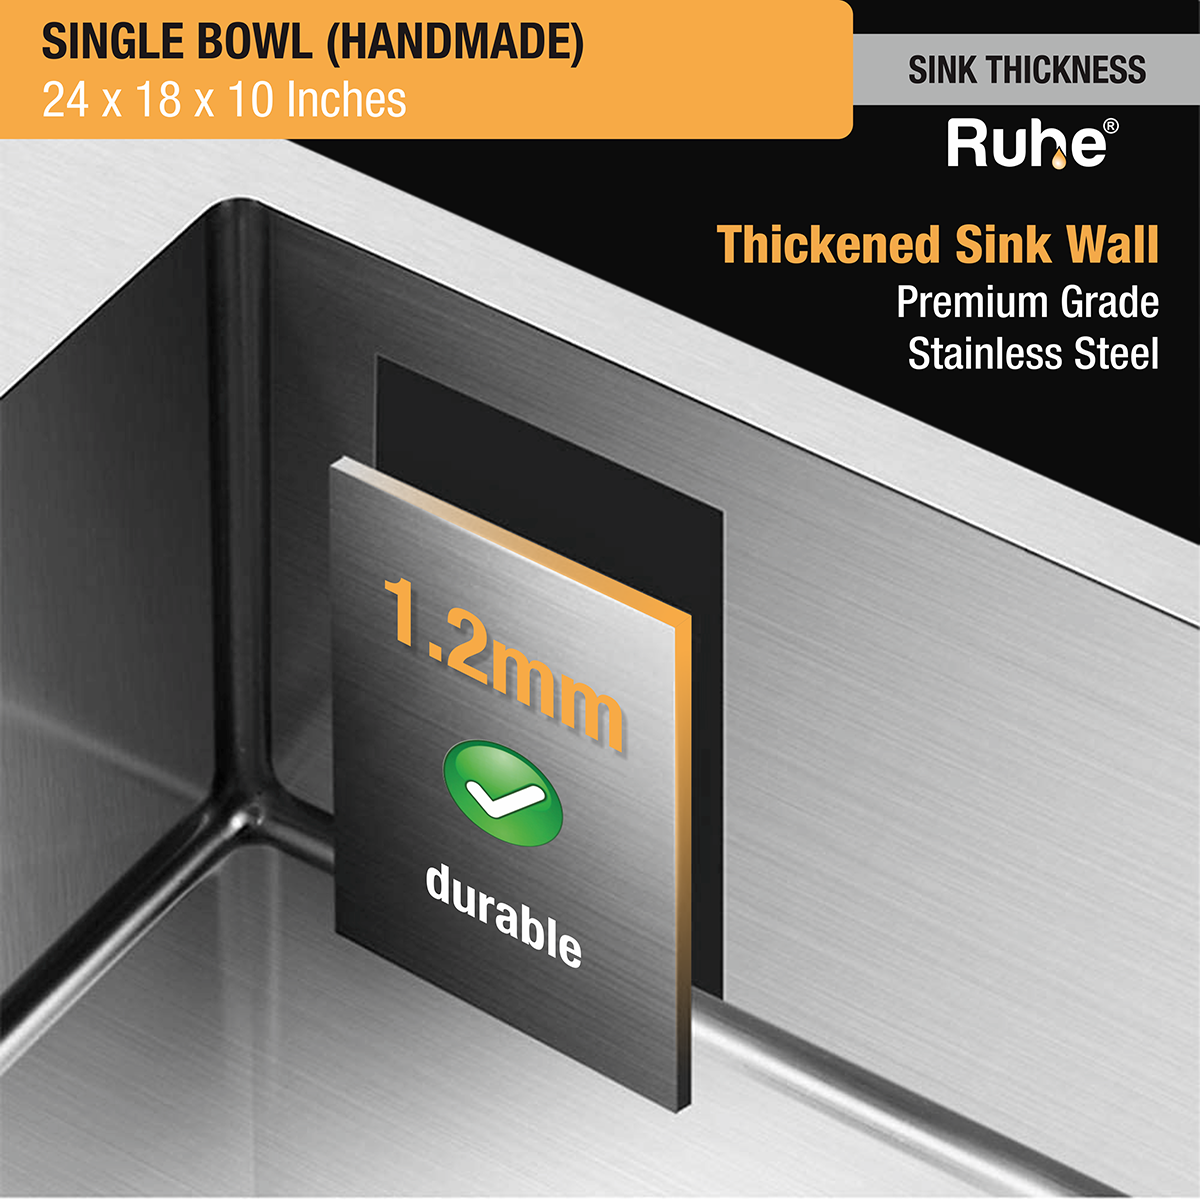 Handmade Single Bowl Premium Kitchen Sink (24 x 18 x 10 Inches) steel thickness